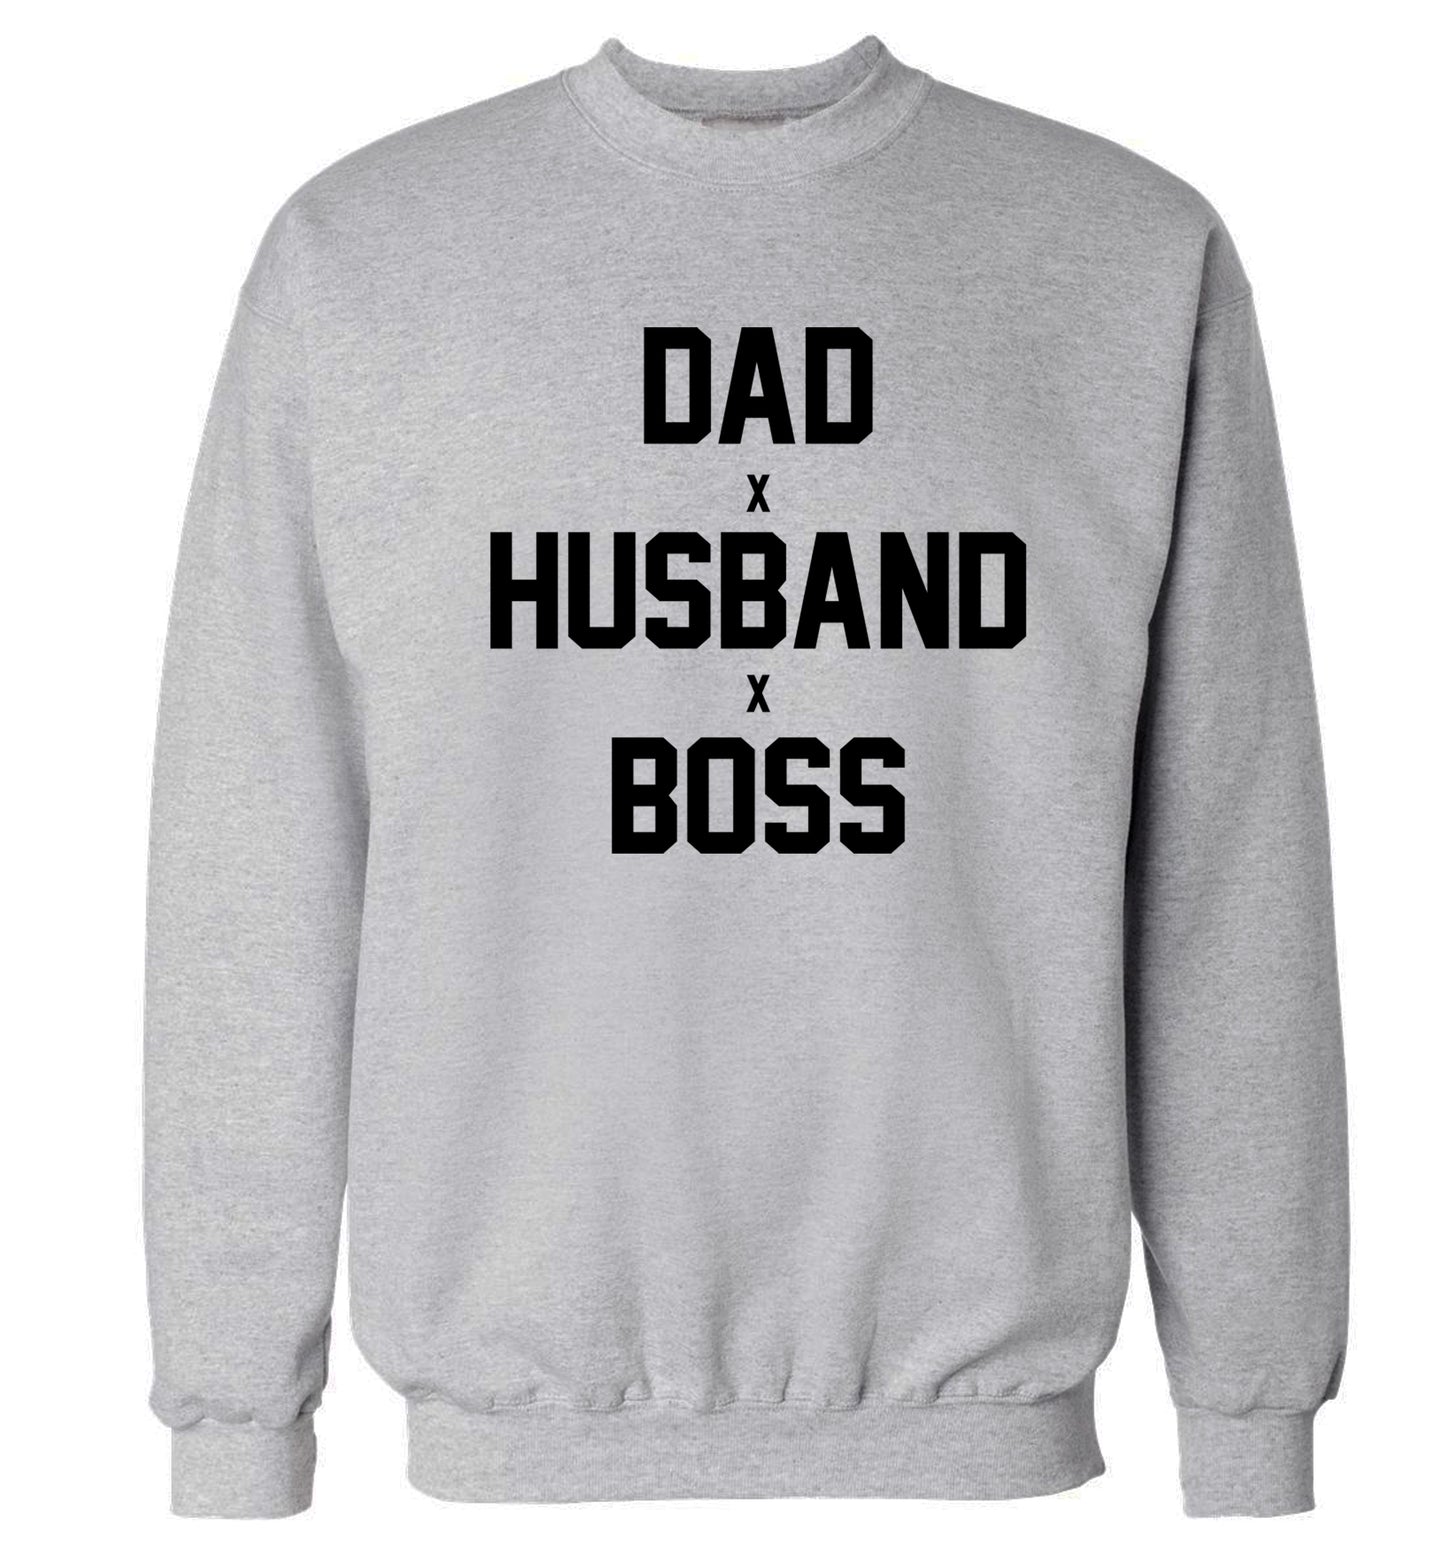 Dad husband boss Adult's unisex grey Sweater 2XL